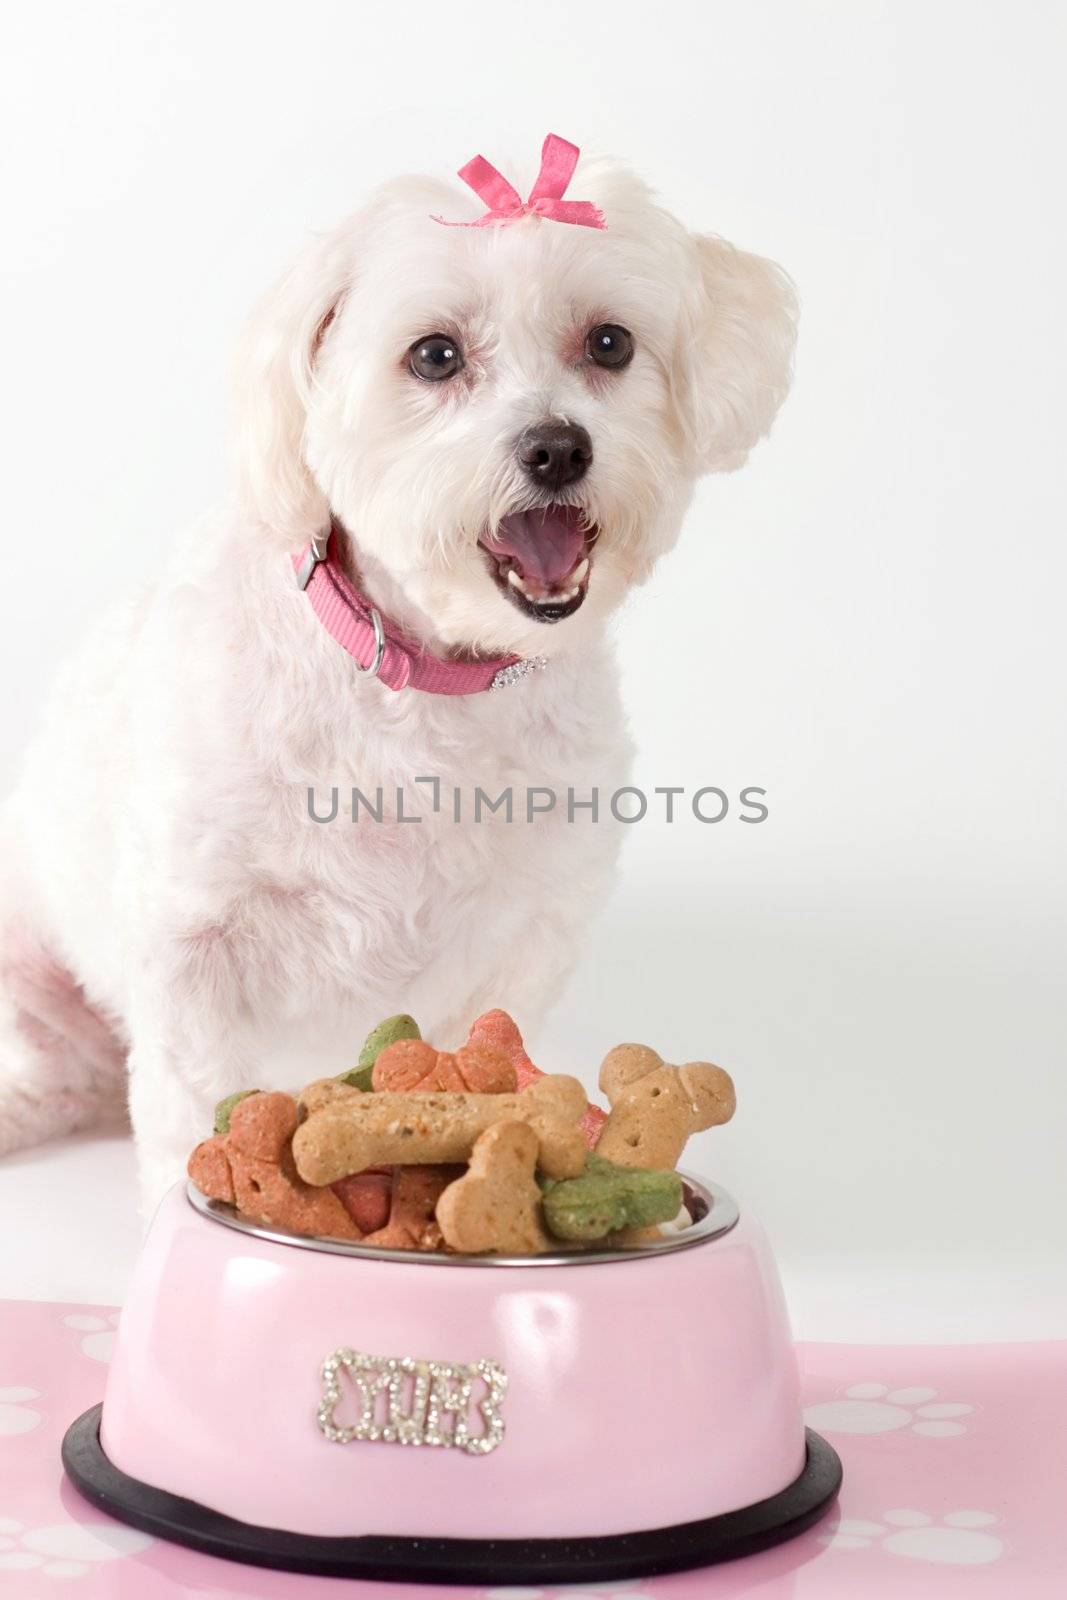 Barking dog sitting by a bowl of dog food